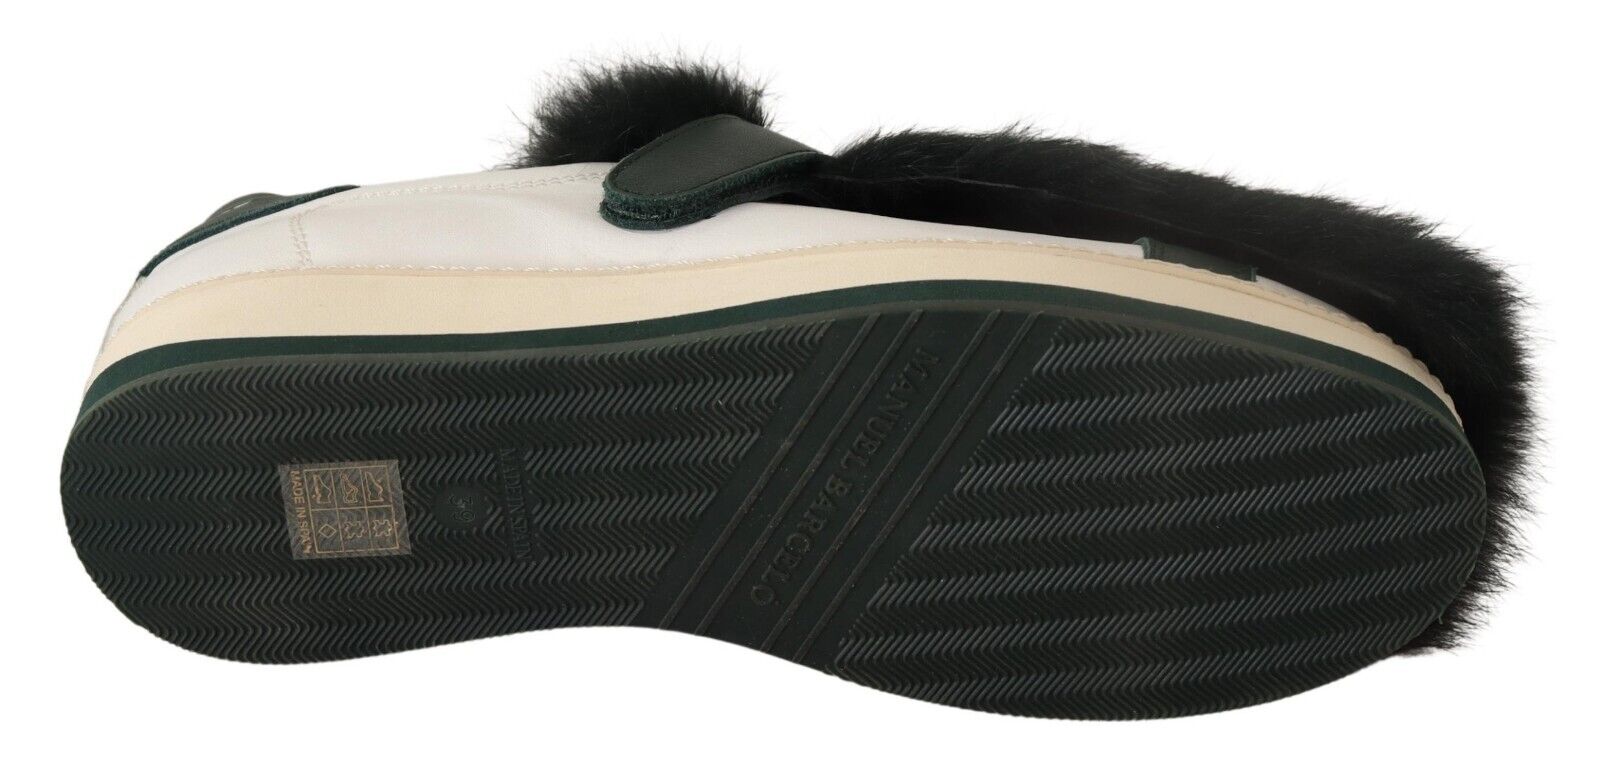 MANUEL BARCELO White Leather Black Fur Low Top Sneakers Shoes - Fizigo